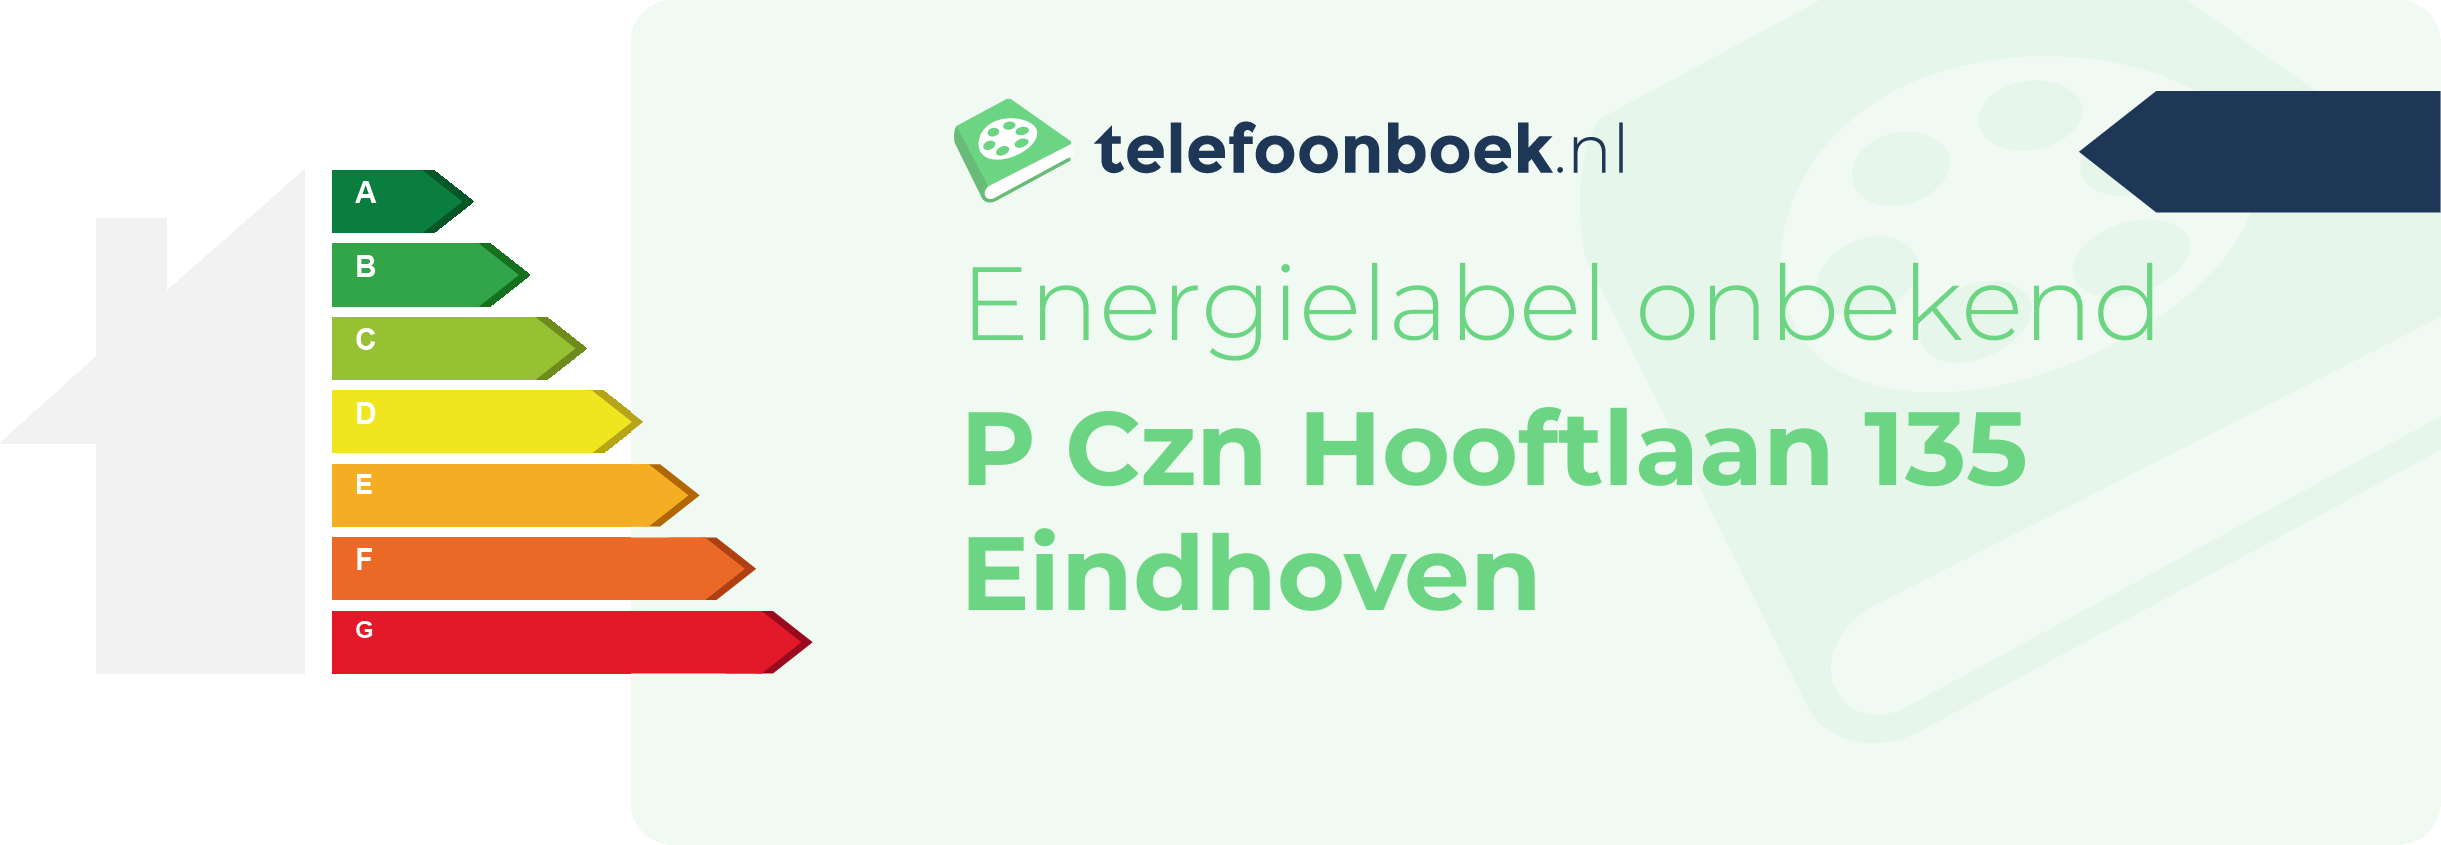 Energielabel P Czn Hooftlaan 135 Eindhoven